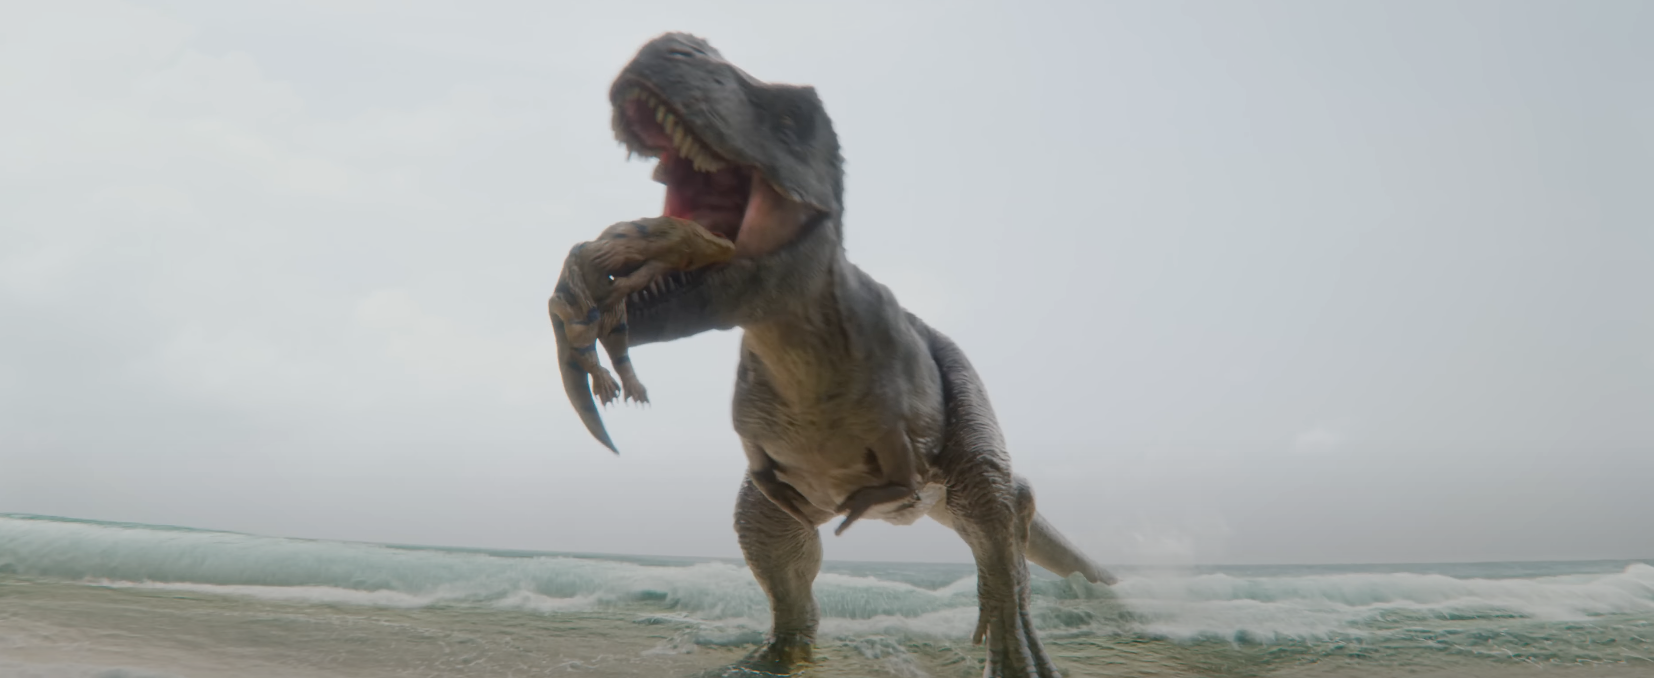 A T-Rex eats a fish from the ocean